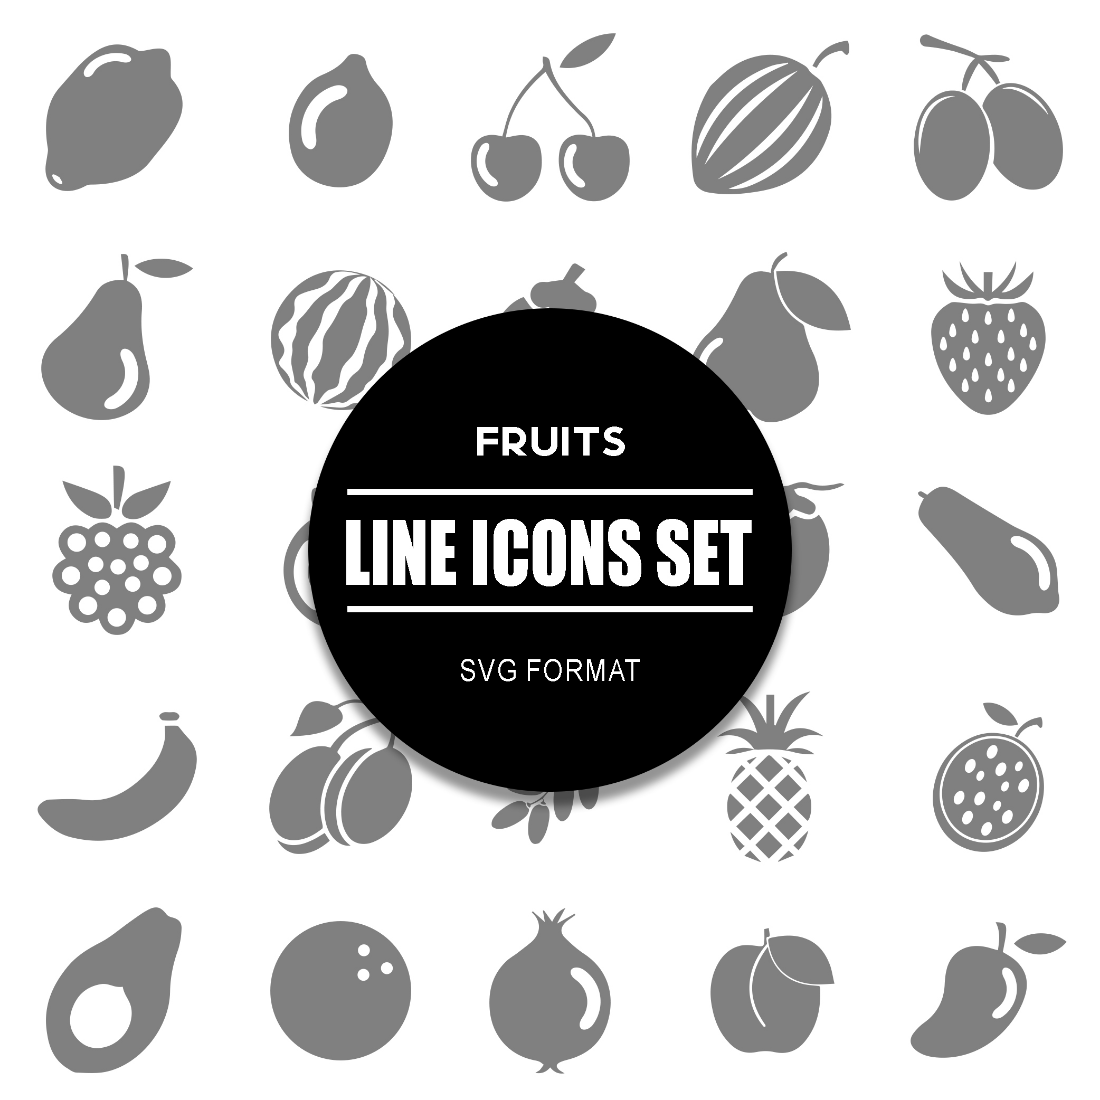 Fruits Icon Set cover image.